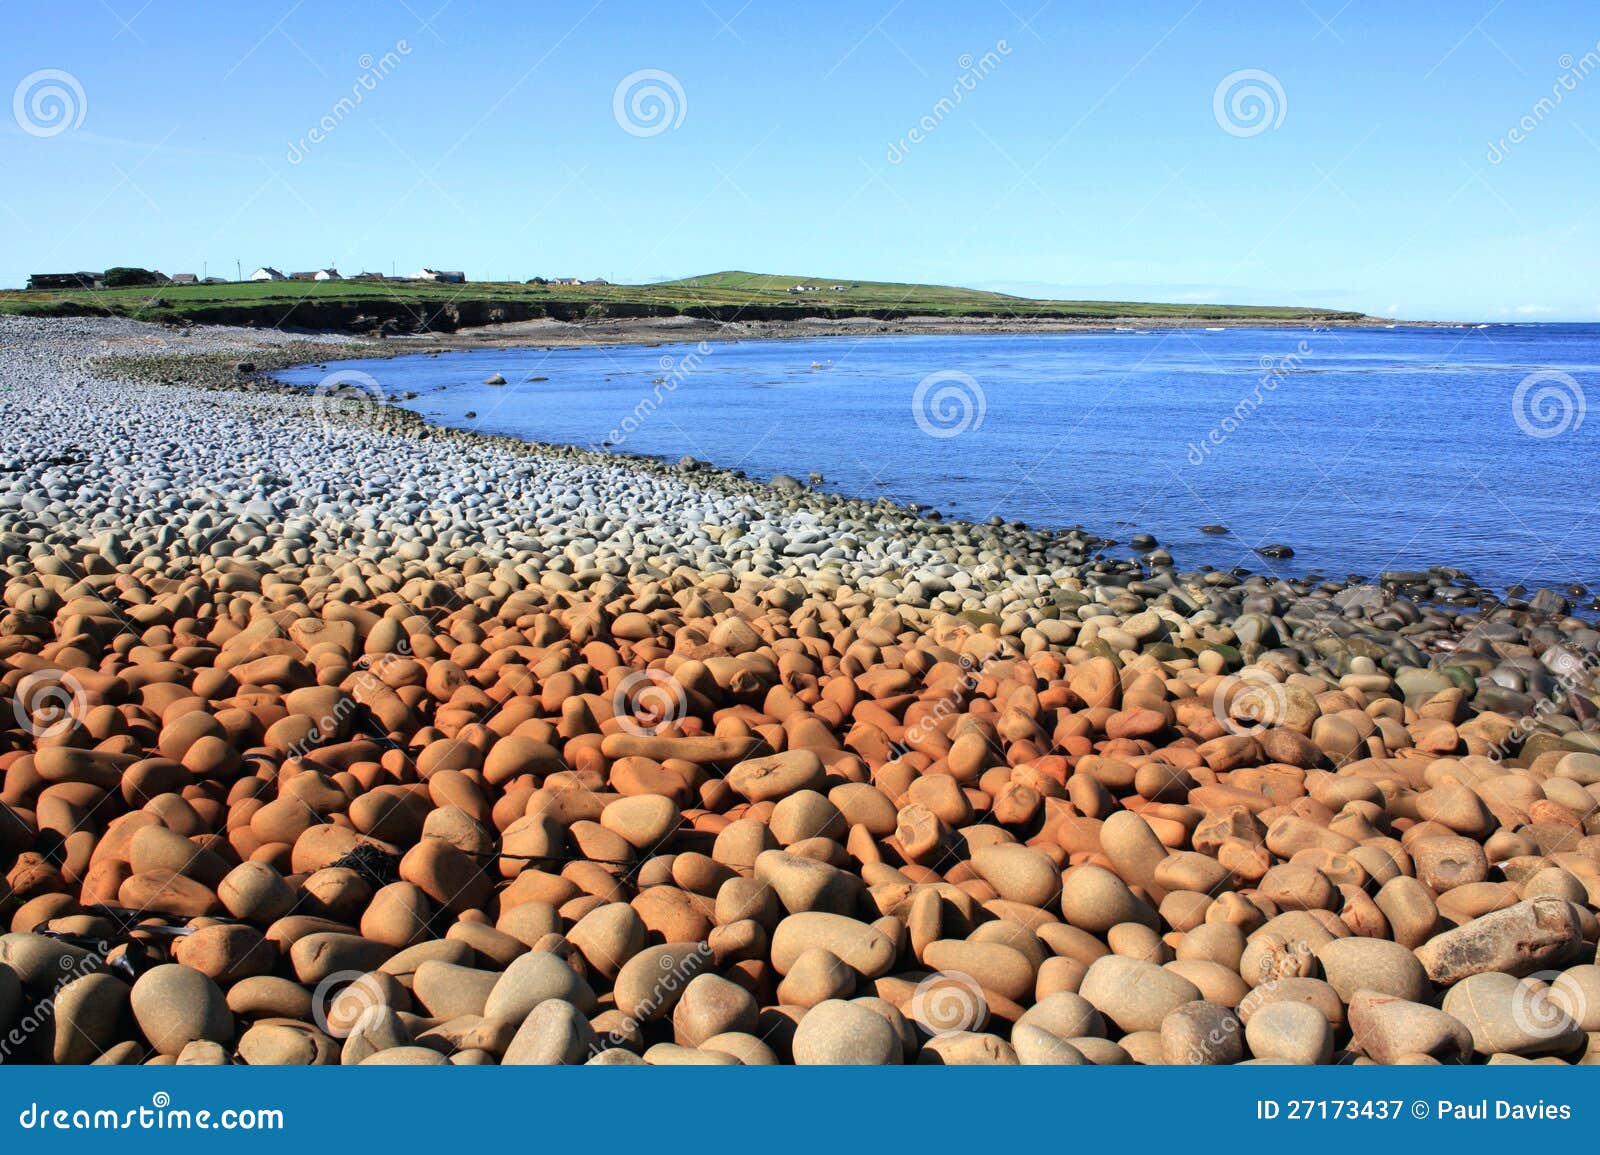 cobble beach, ireland